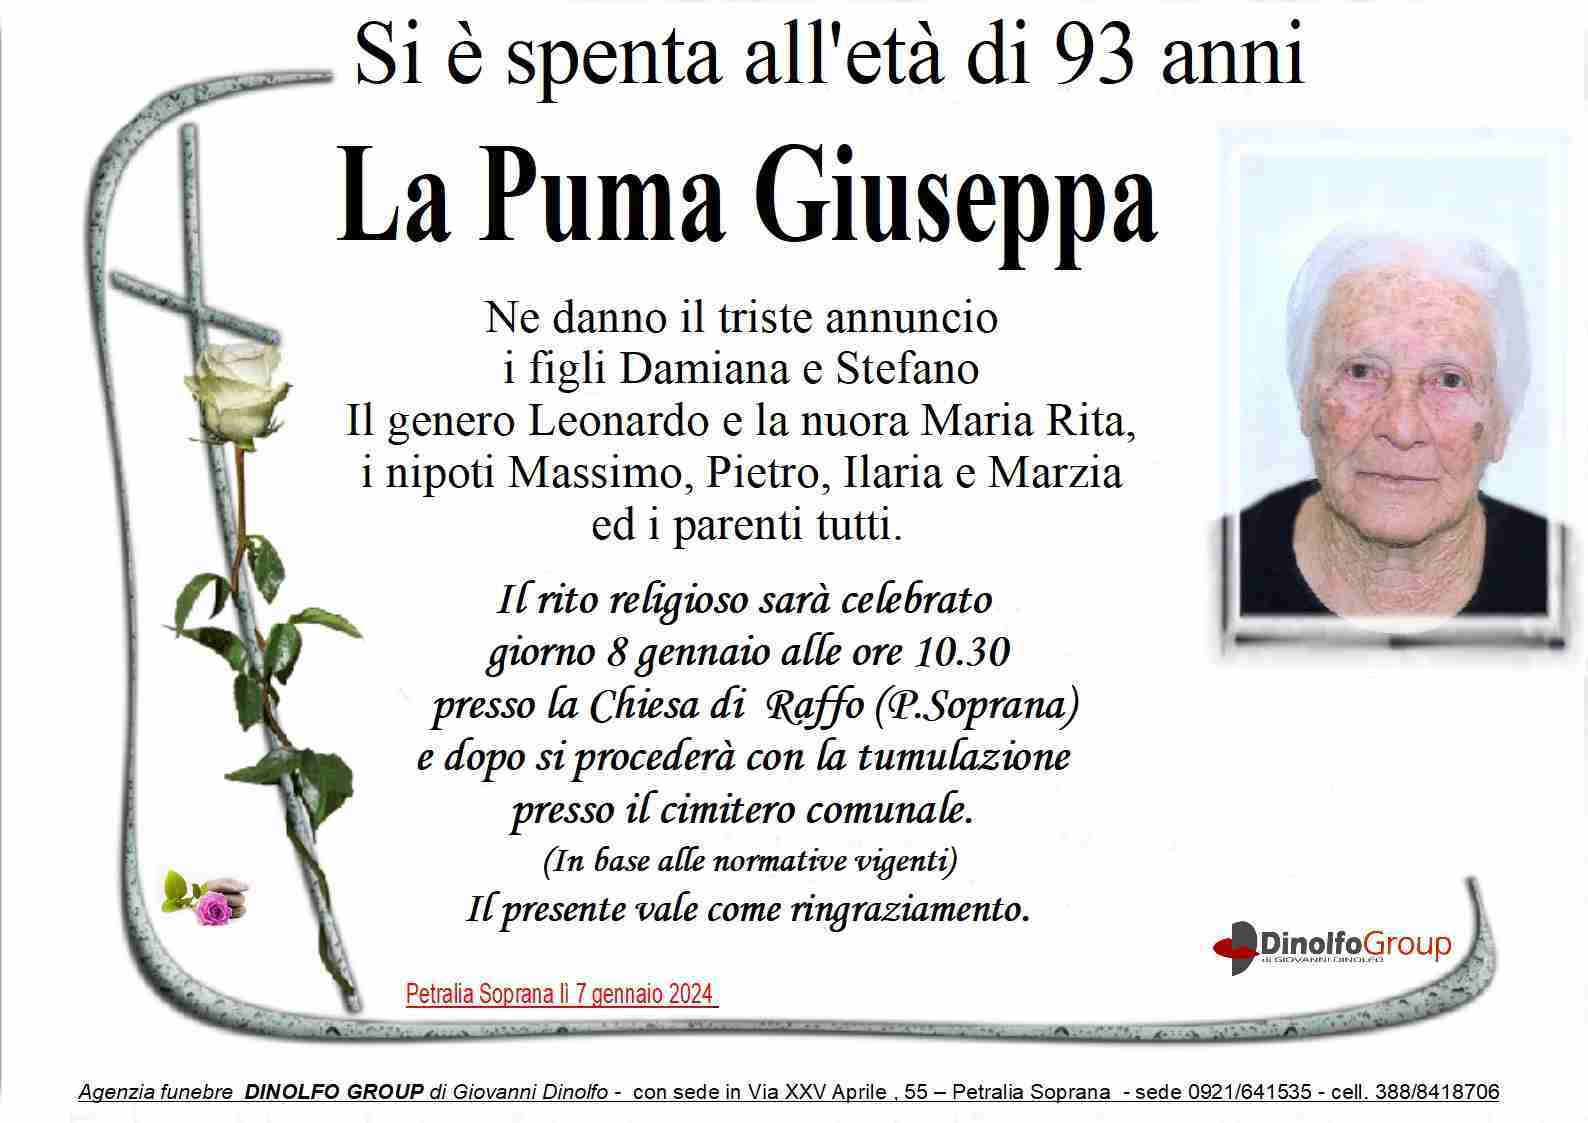 Giuseppa Li Puma